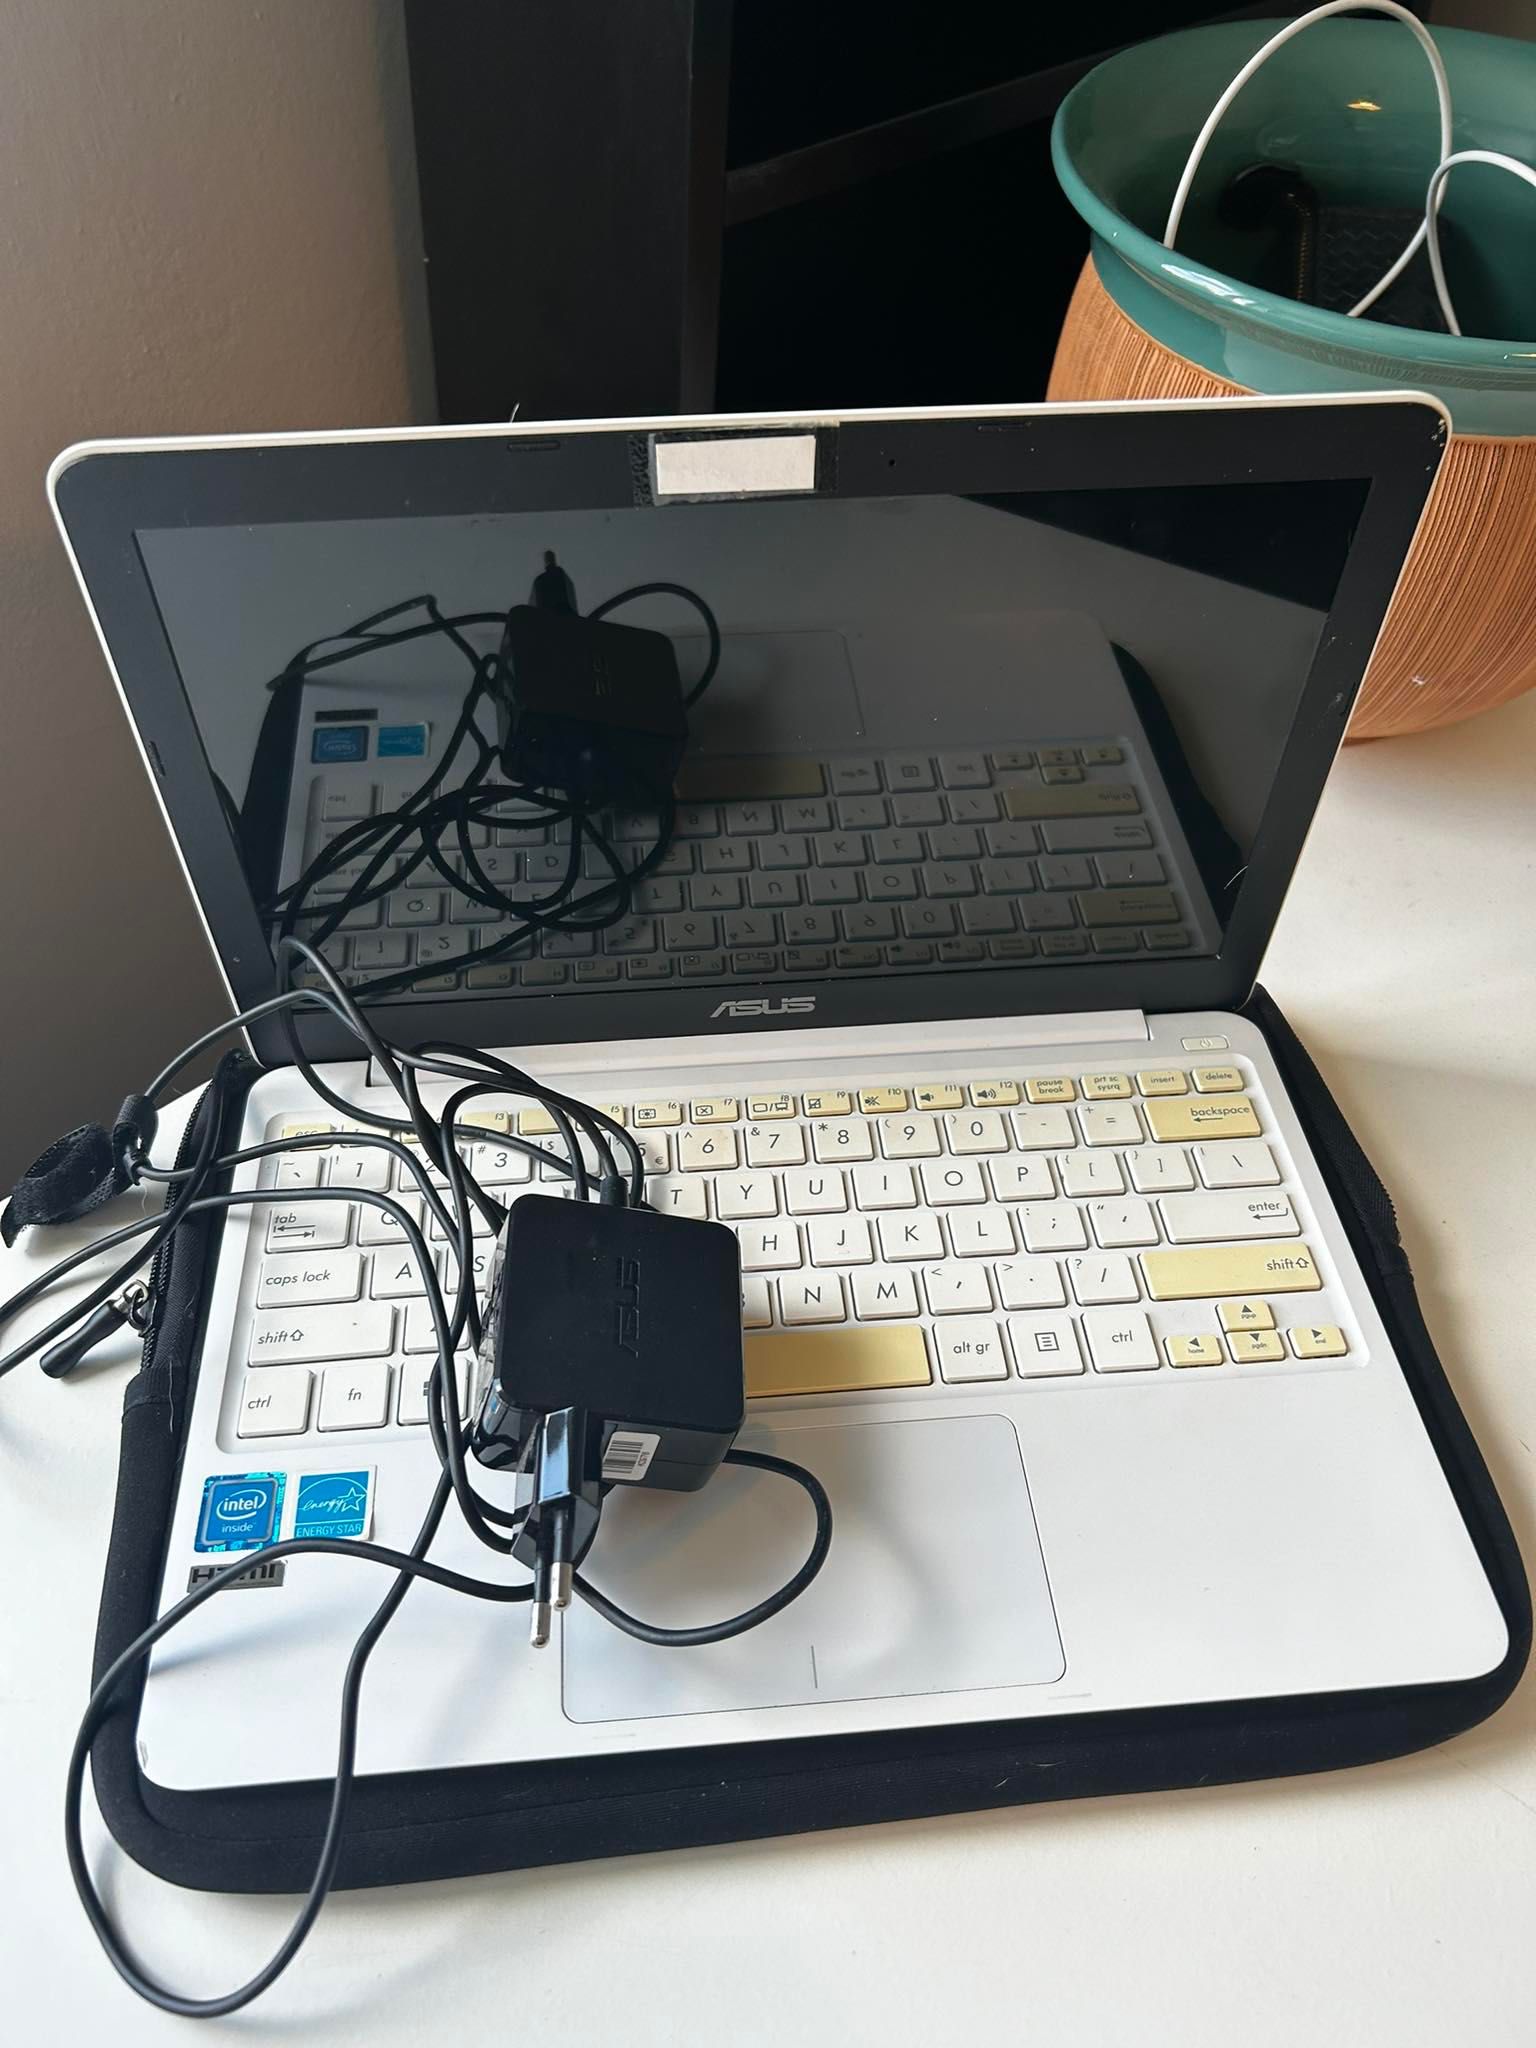 ASUS e200h - kompaktowy laptop do nauki - z futerałem